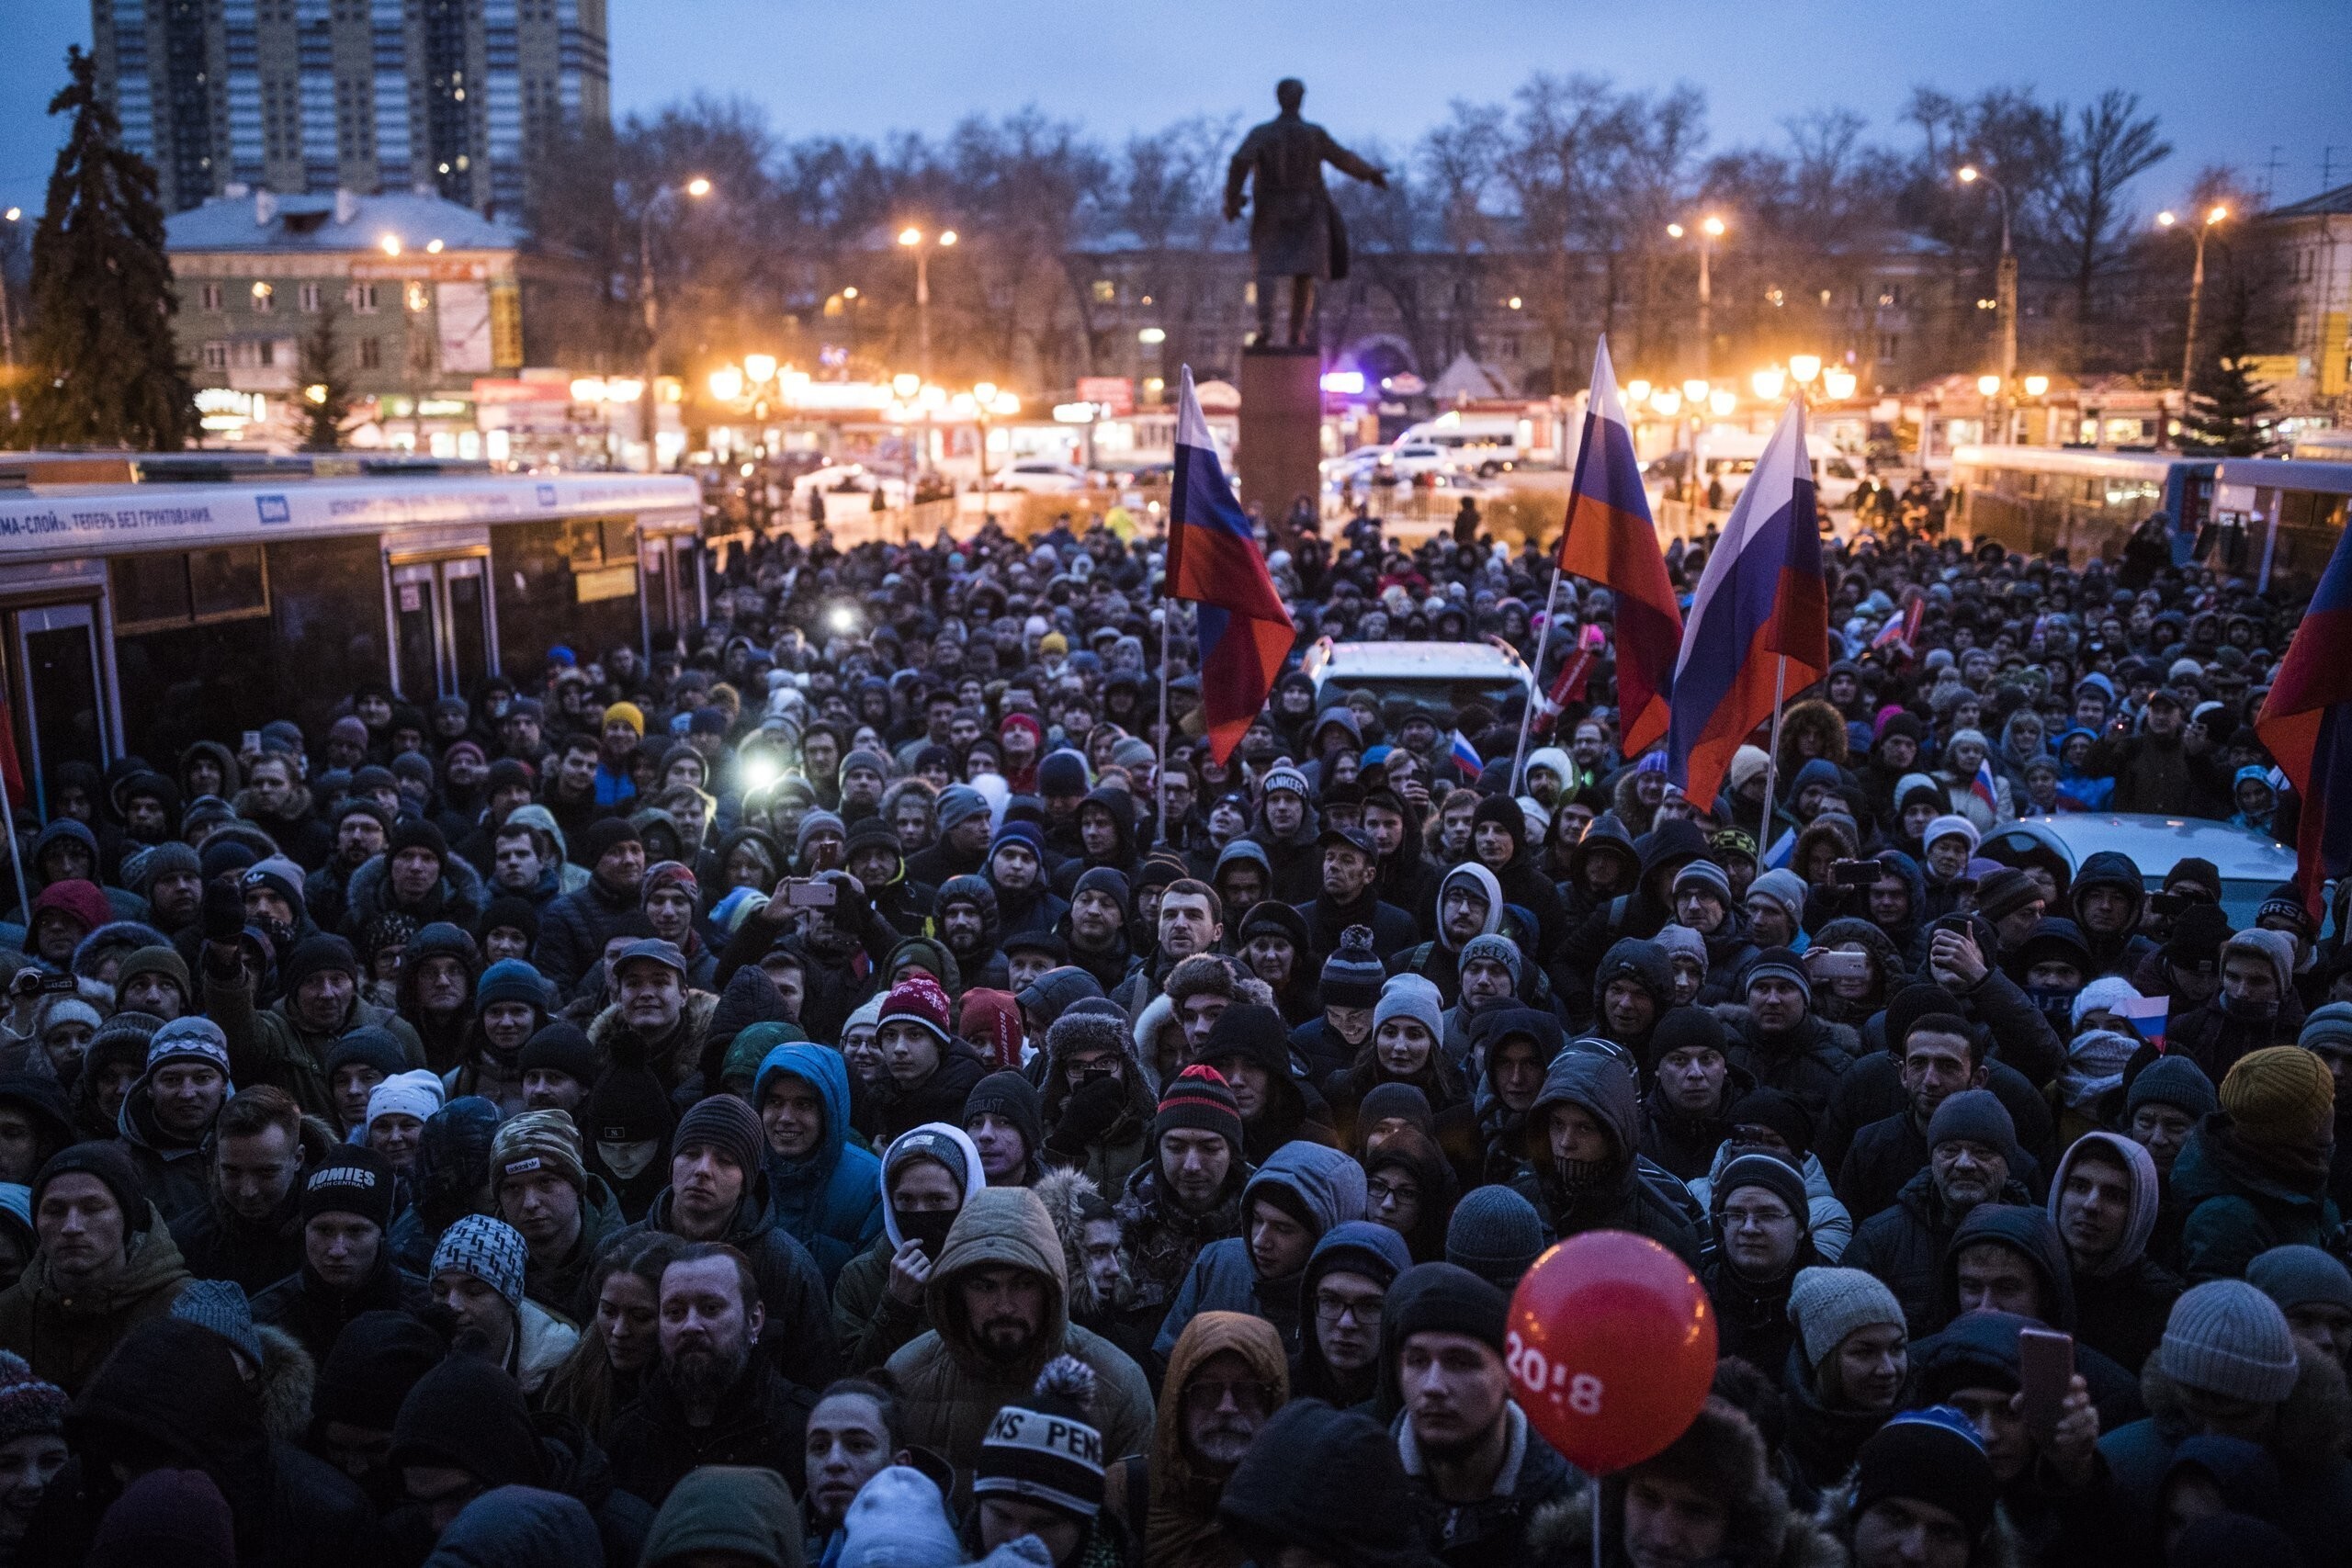 Картинка митинг. Митинг. Митинги в России. Митинг картинки. Право на митинги и шествия.